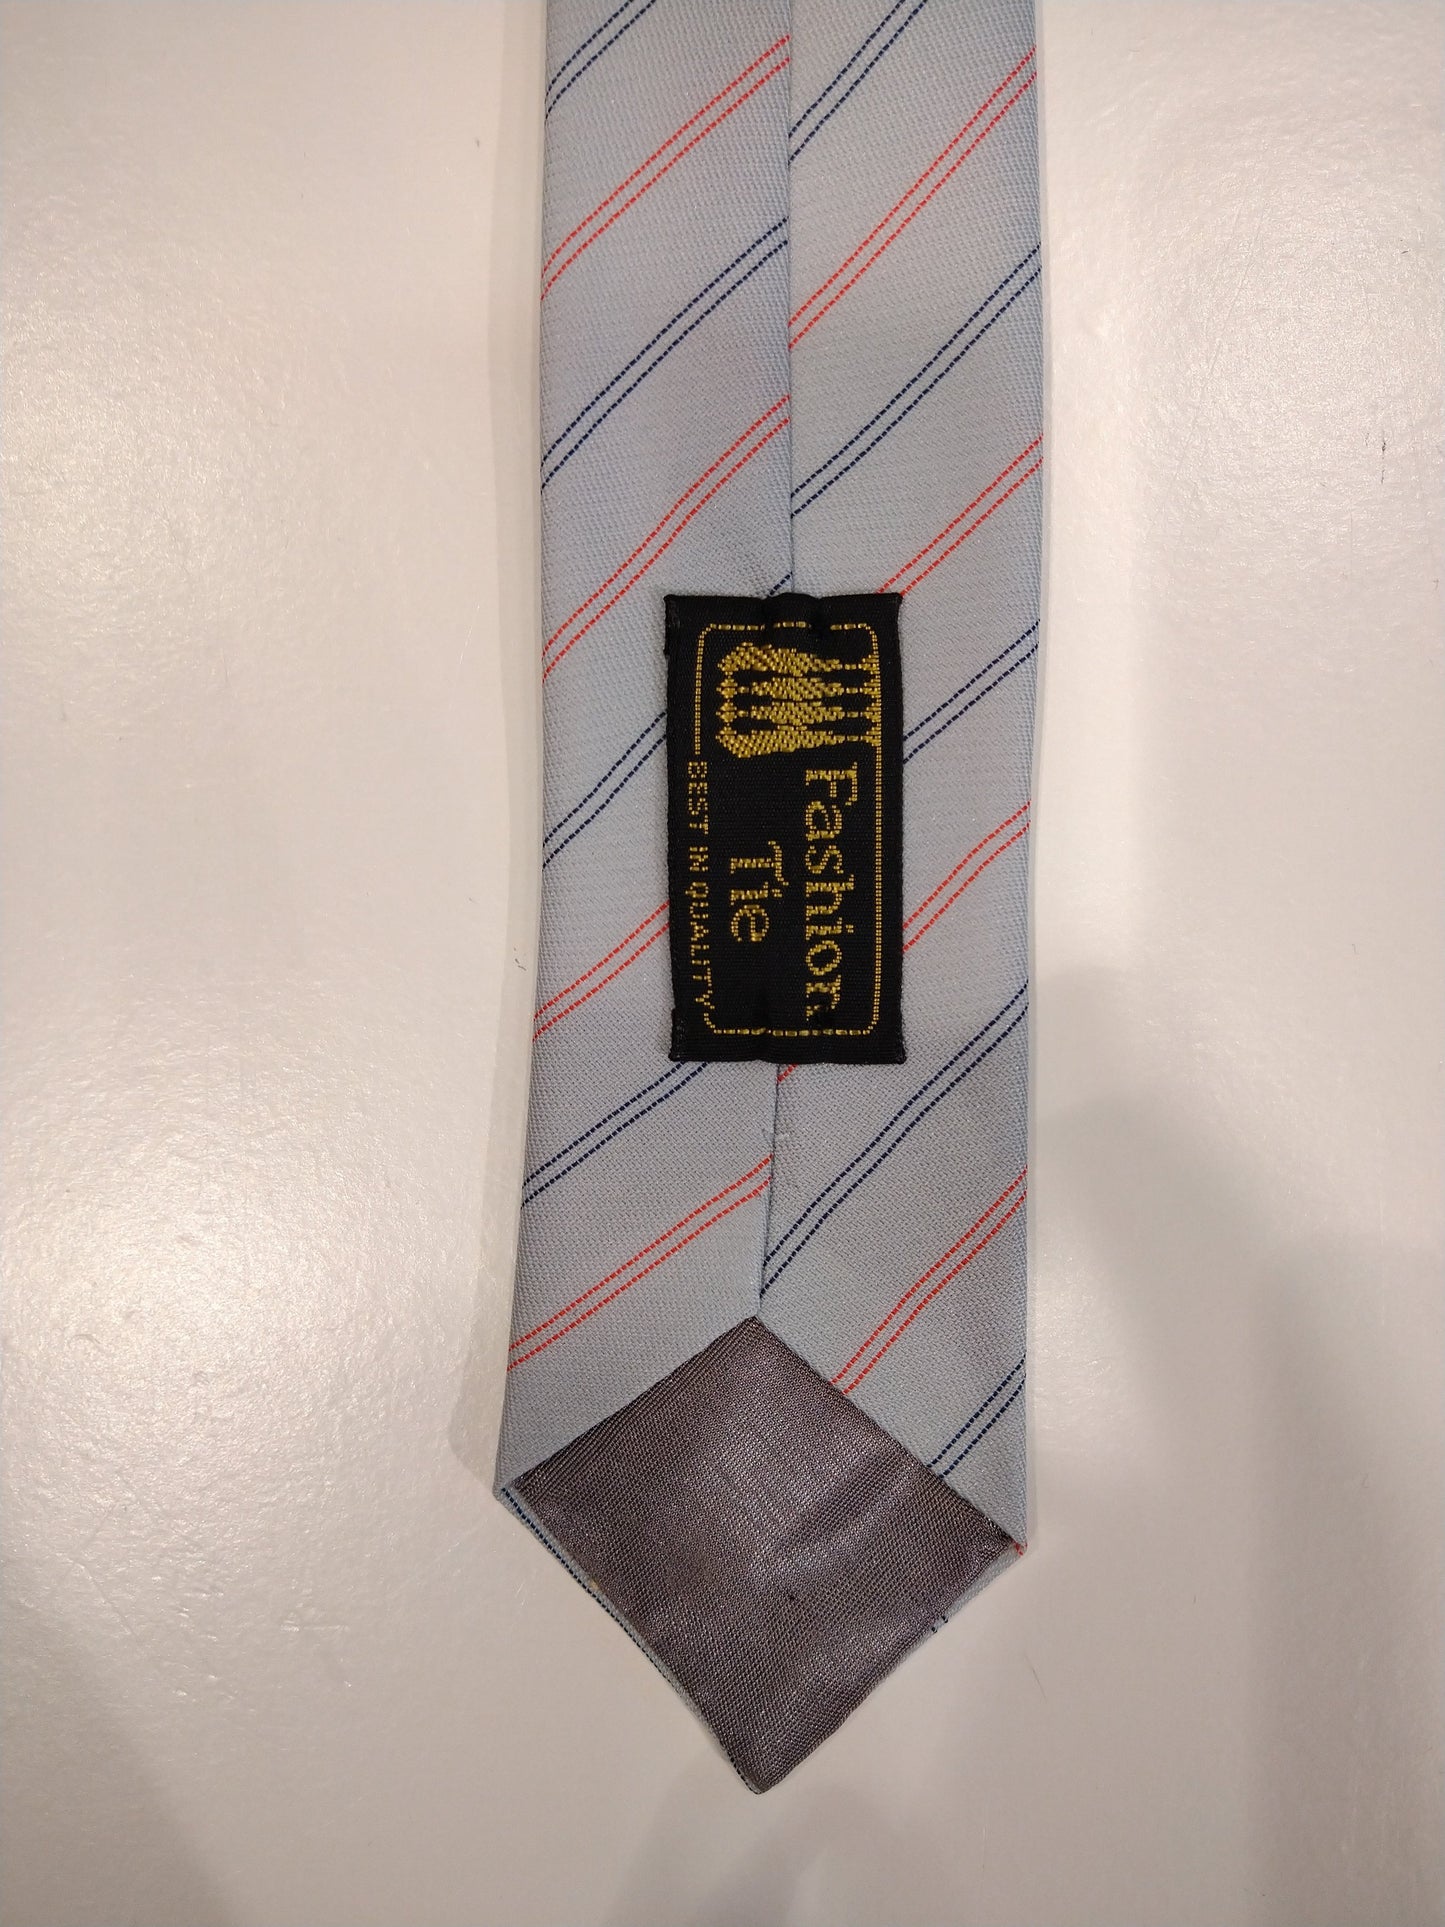 Cravatta di moda vintage cravatta extra stretta. Strisce rossa blu grigia.